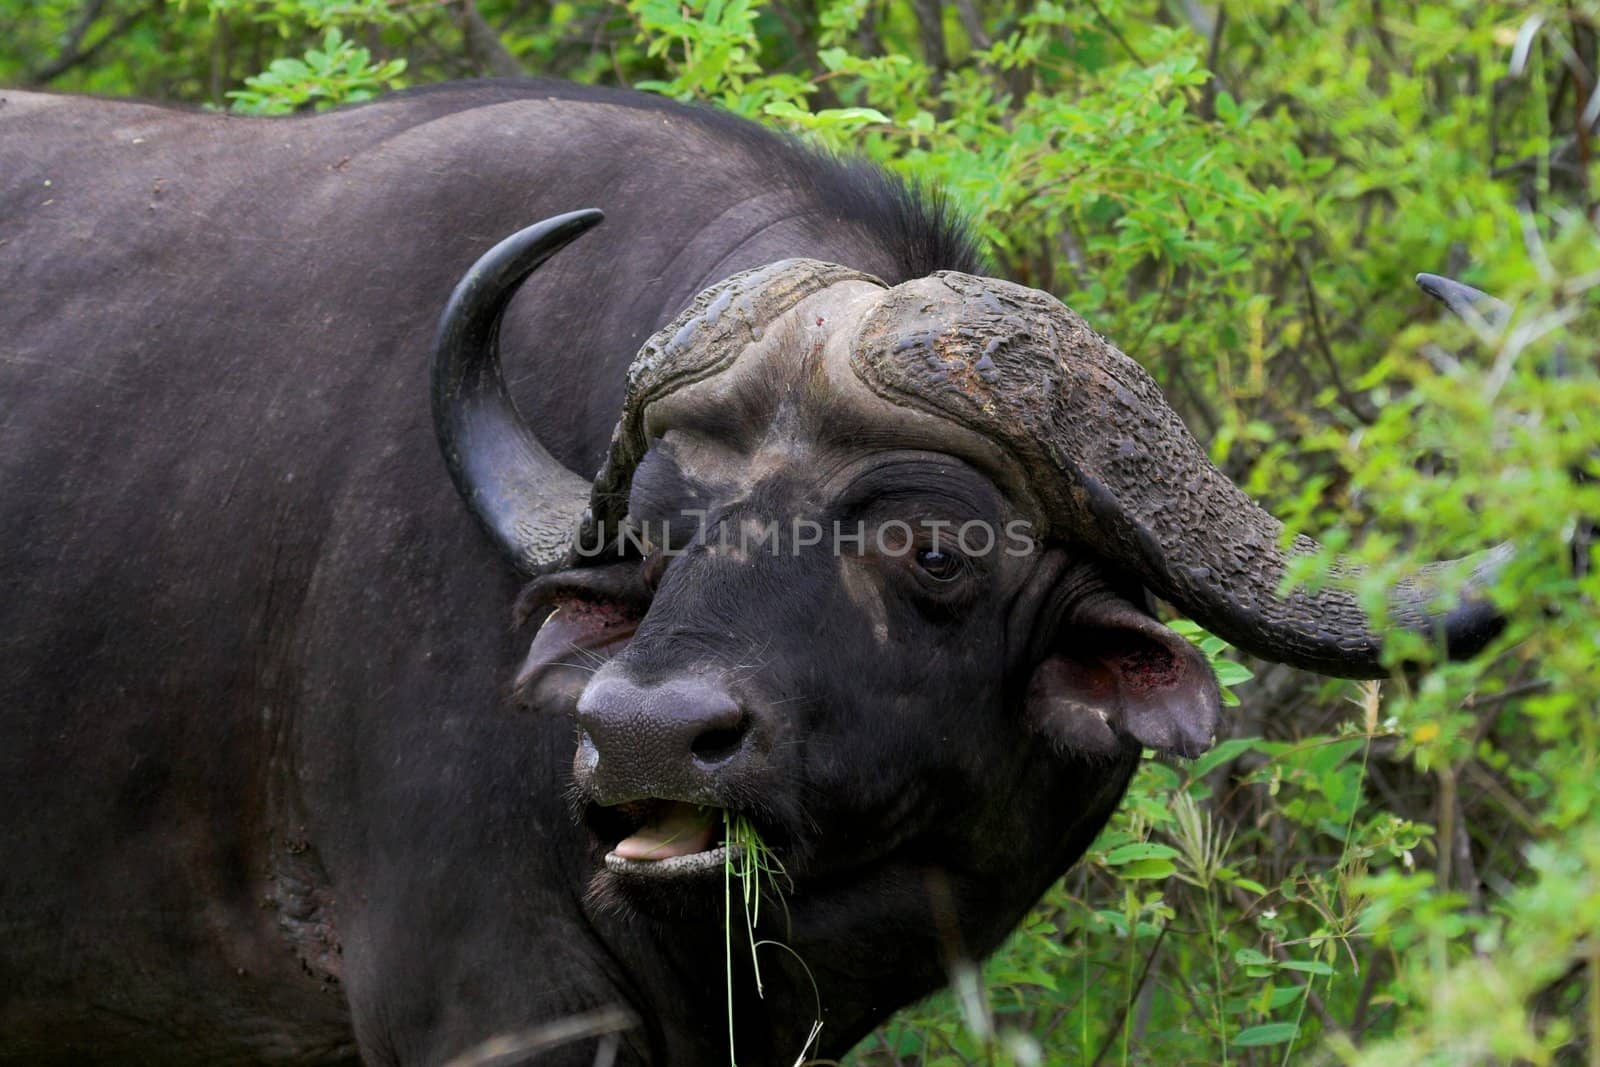 Cape buffalo feeding